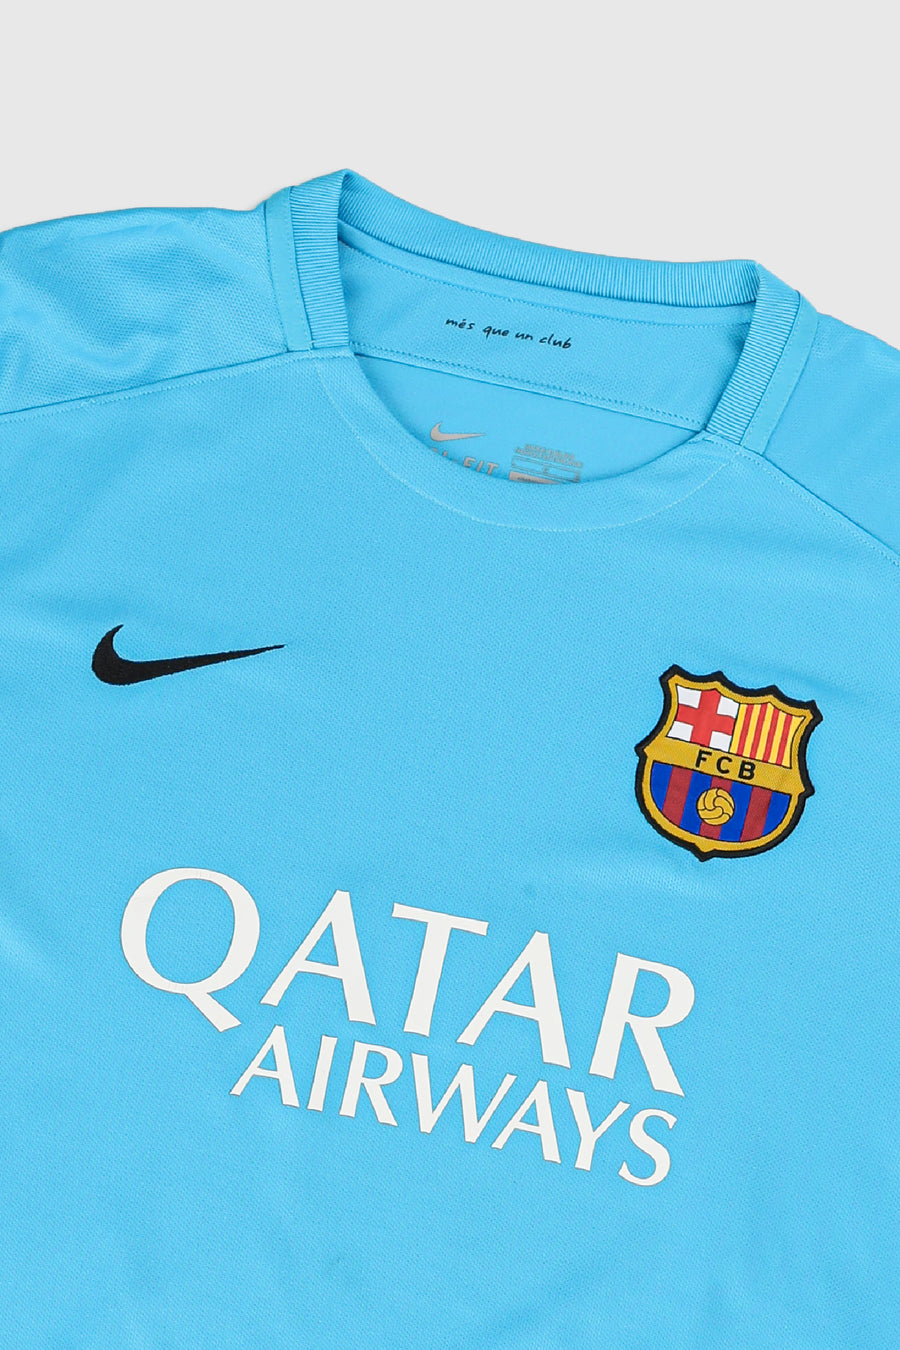 Barcelona Soccer Jersey - M